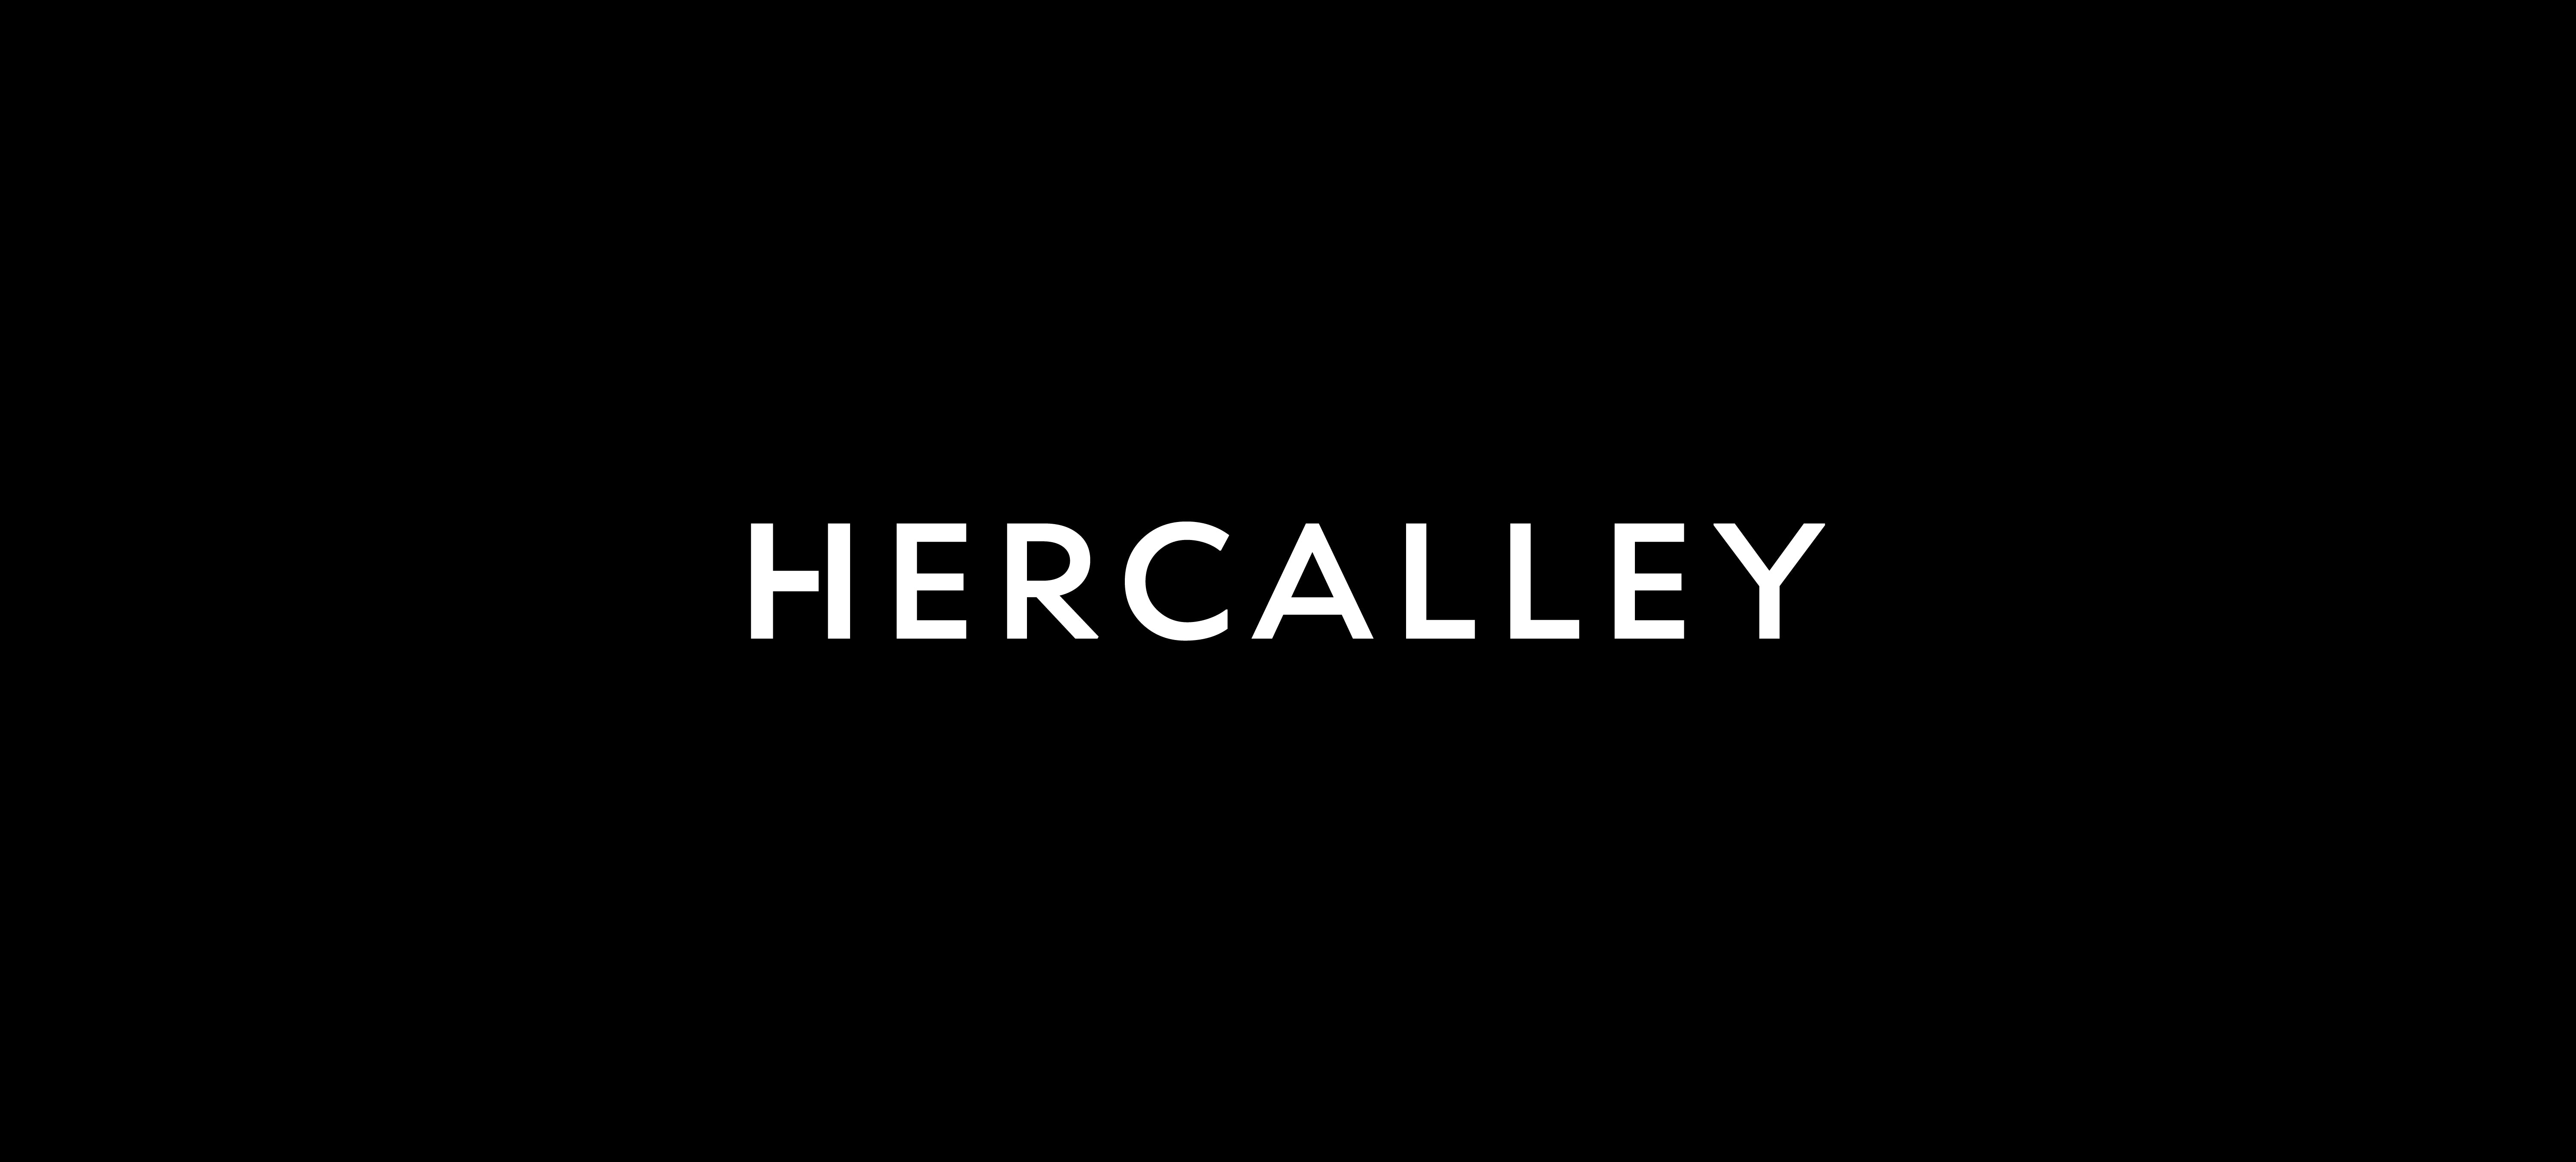 Hercalley